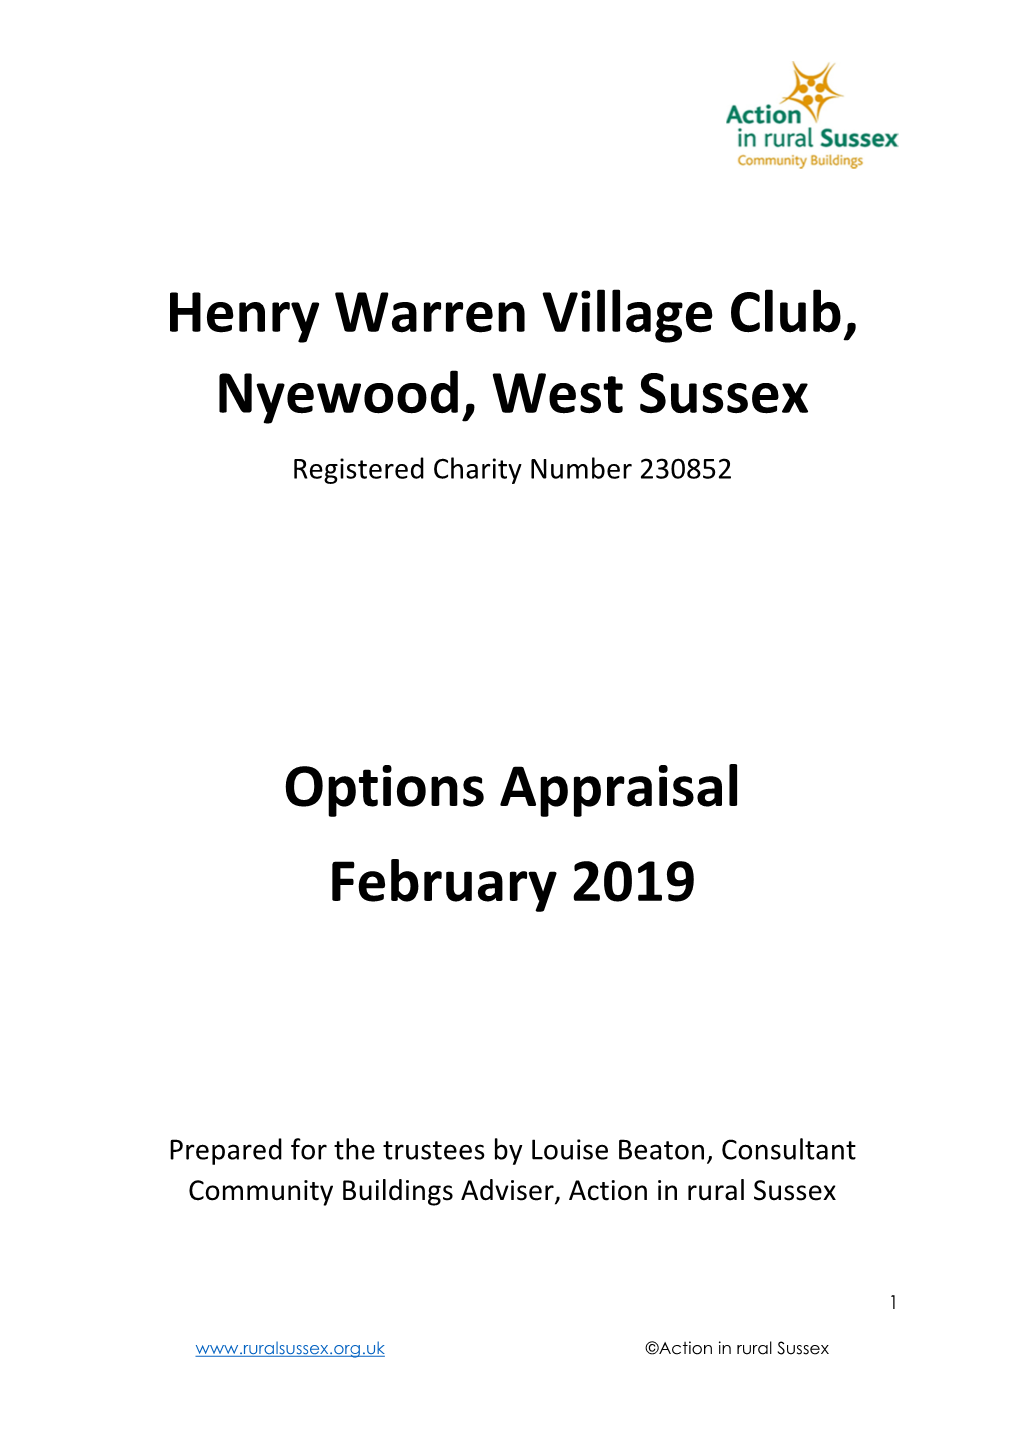 Henry Warren Village Club, Nyewood, West Sussex Options